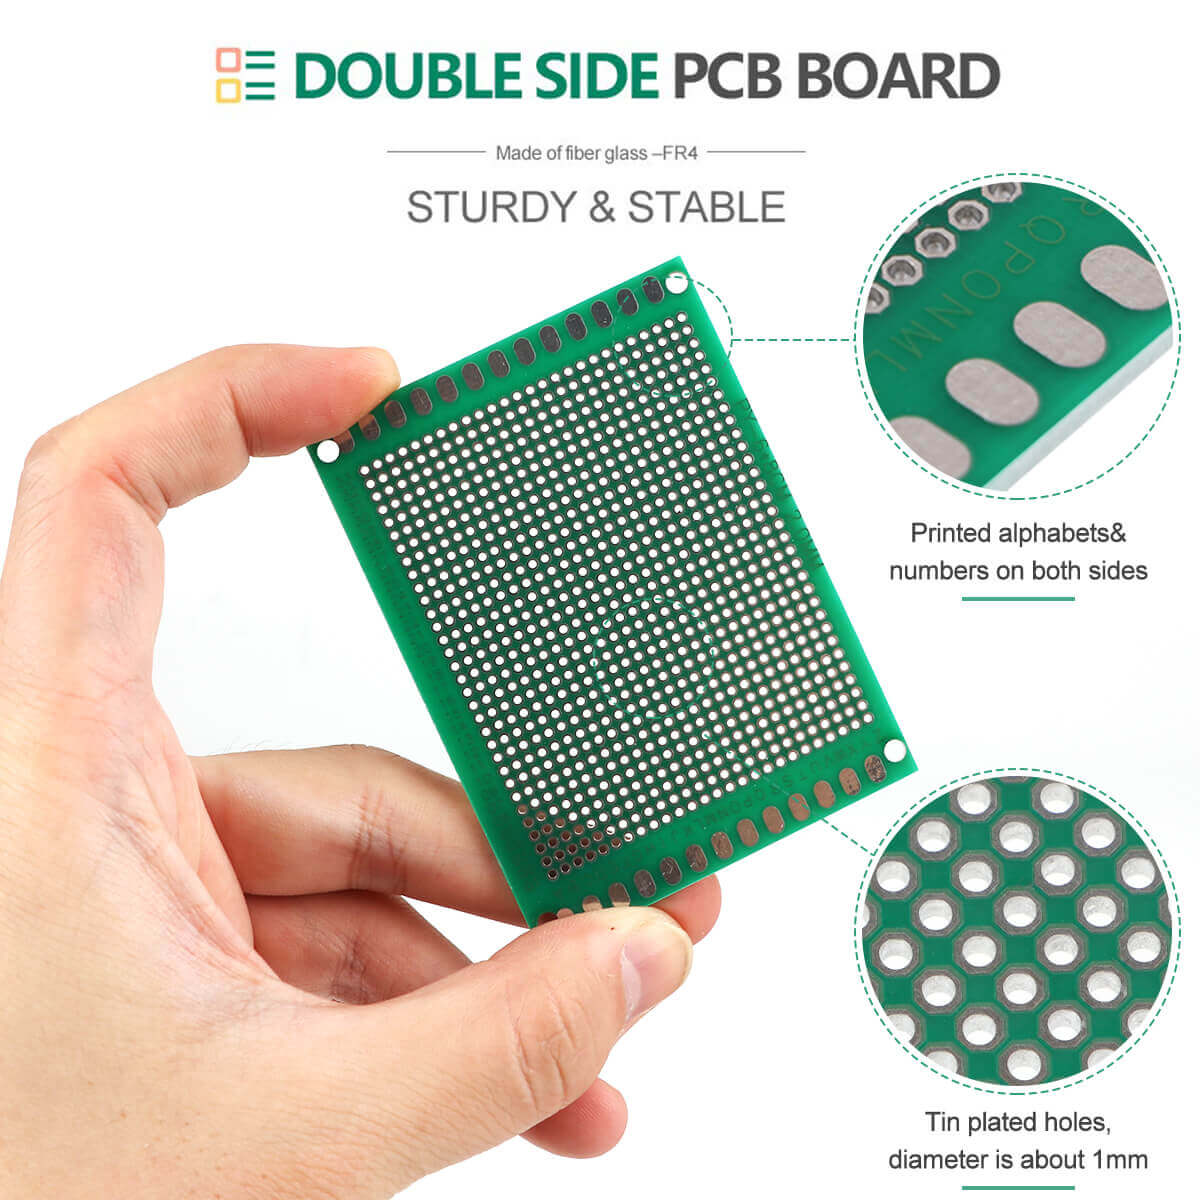 Buy Clad Coating PCB Universal PCB Prototype Board for DIY Soldering